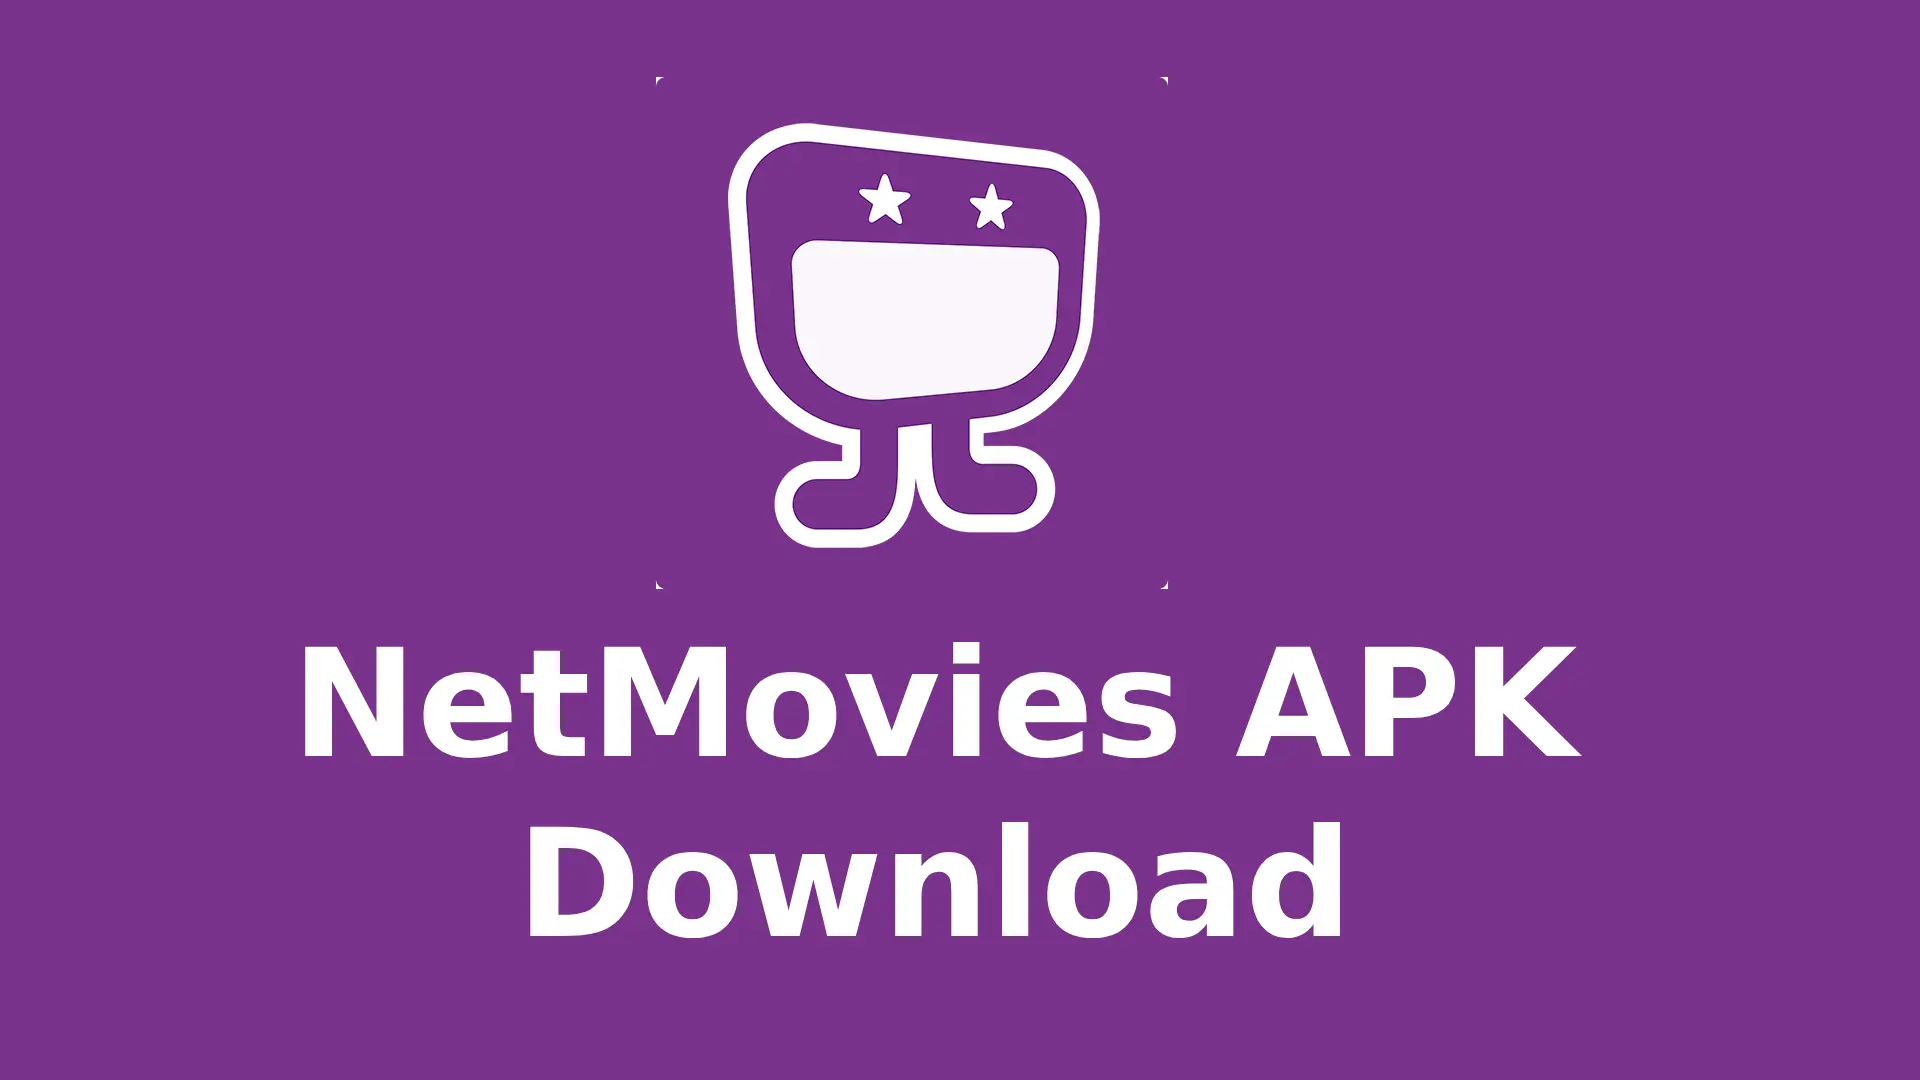 NetMovies apk download